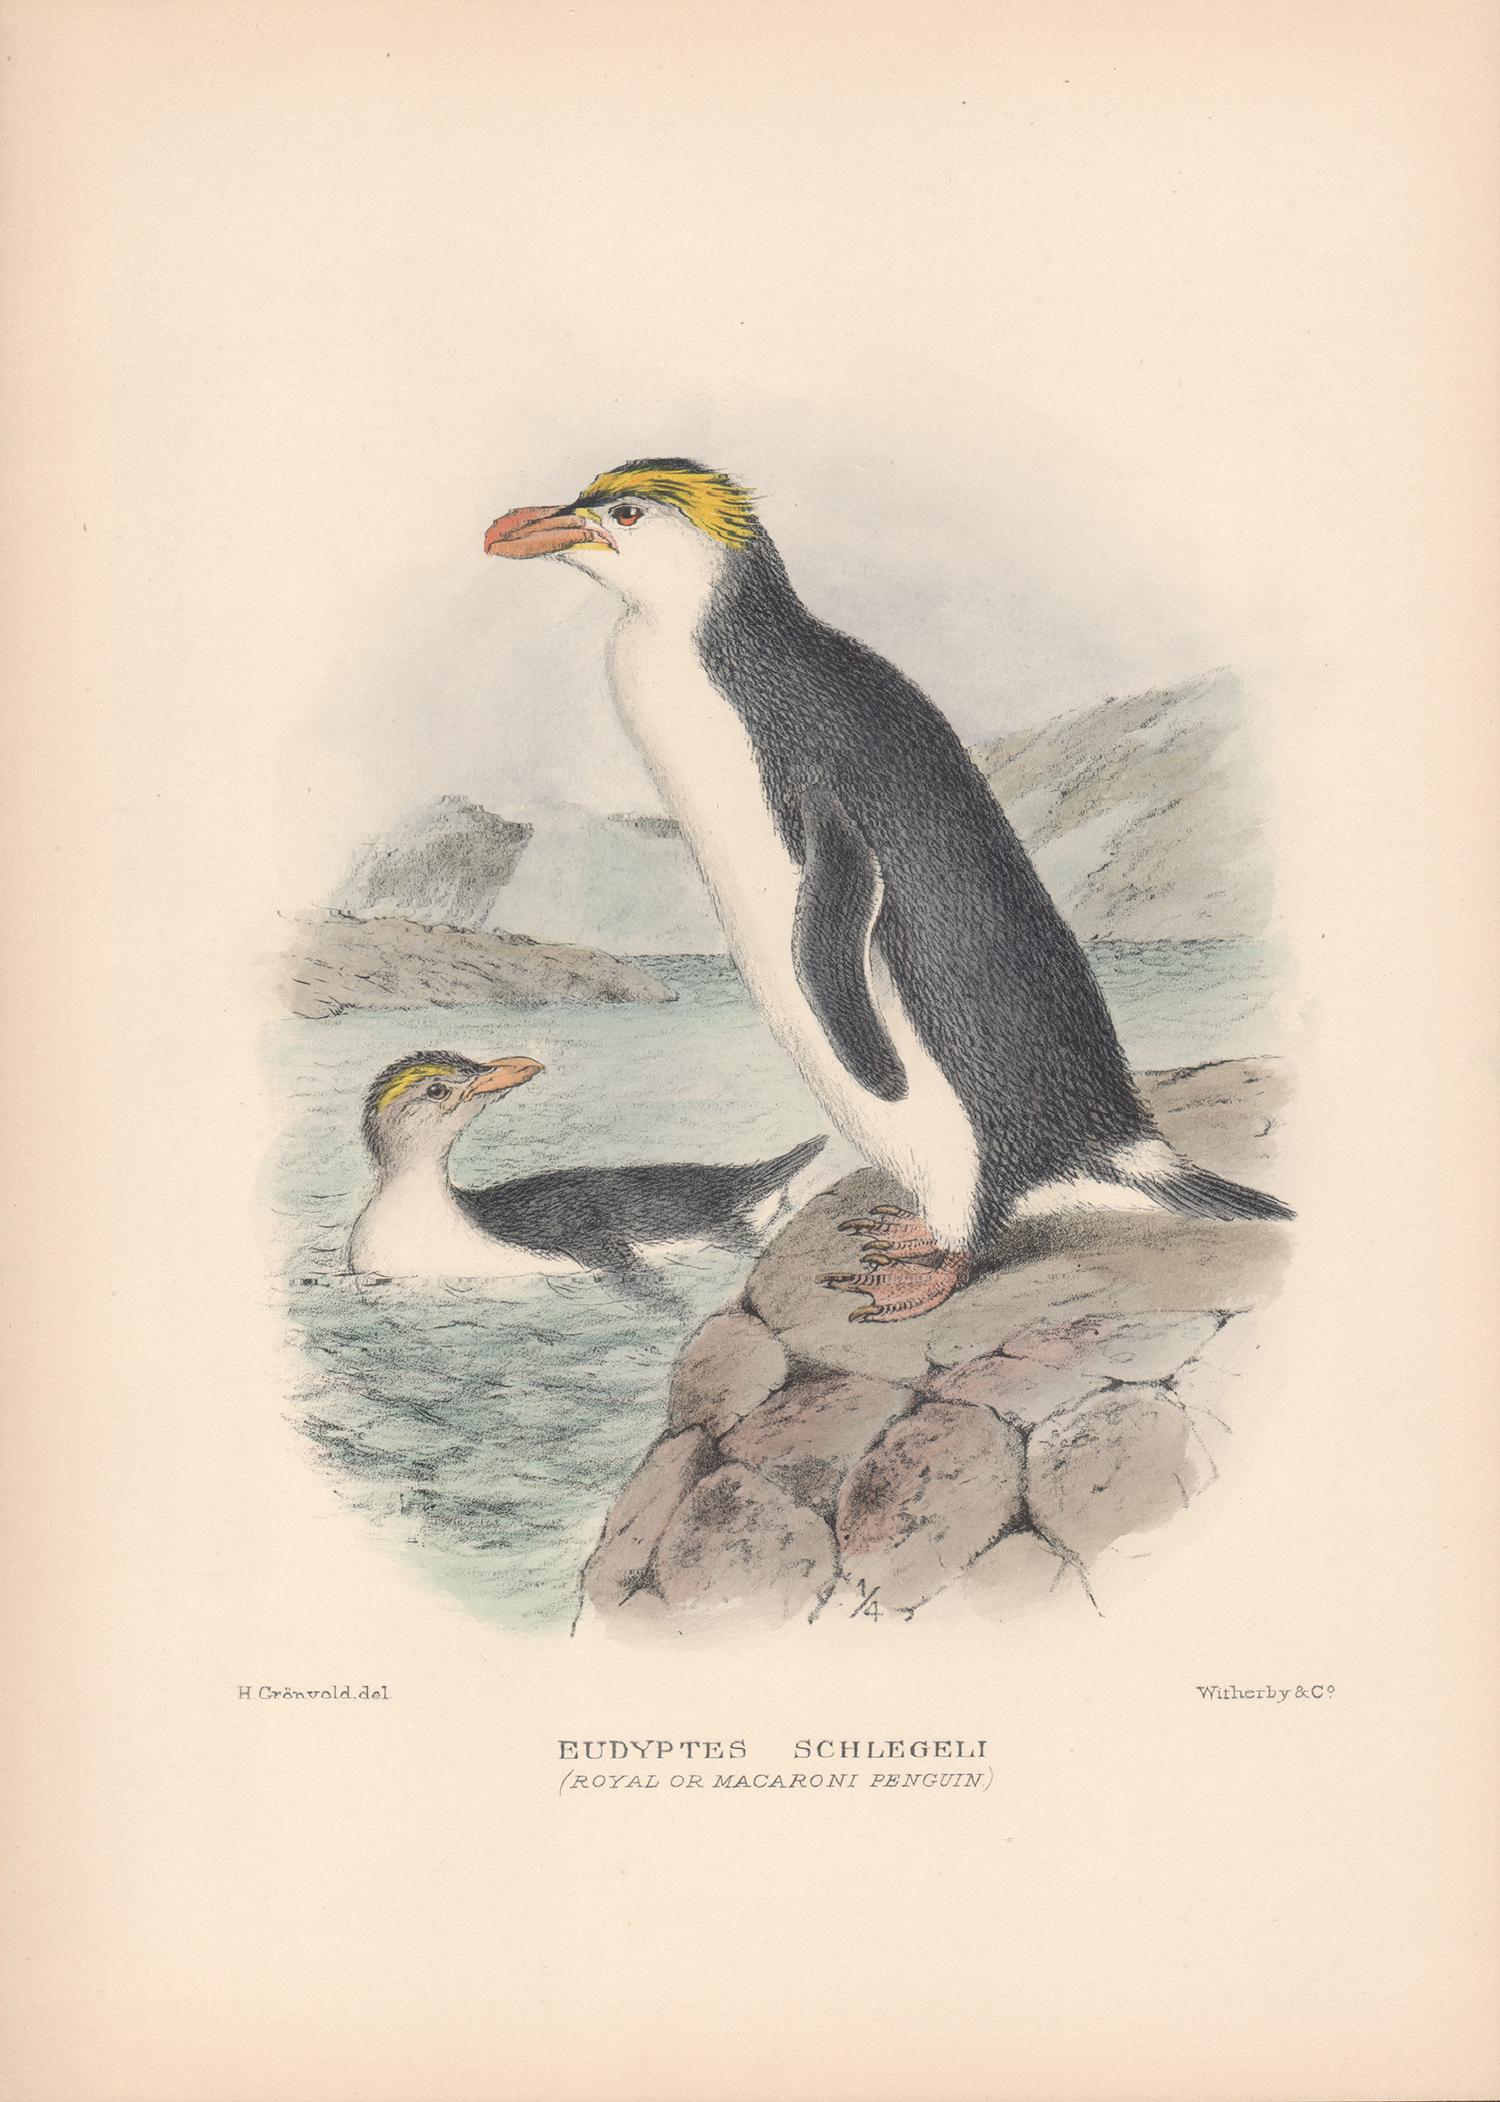 Royal or Macaroni Penguin, Sea Bird lithograph with hand-colouring, 1928